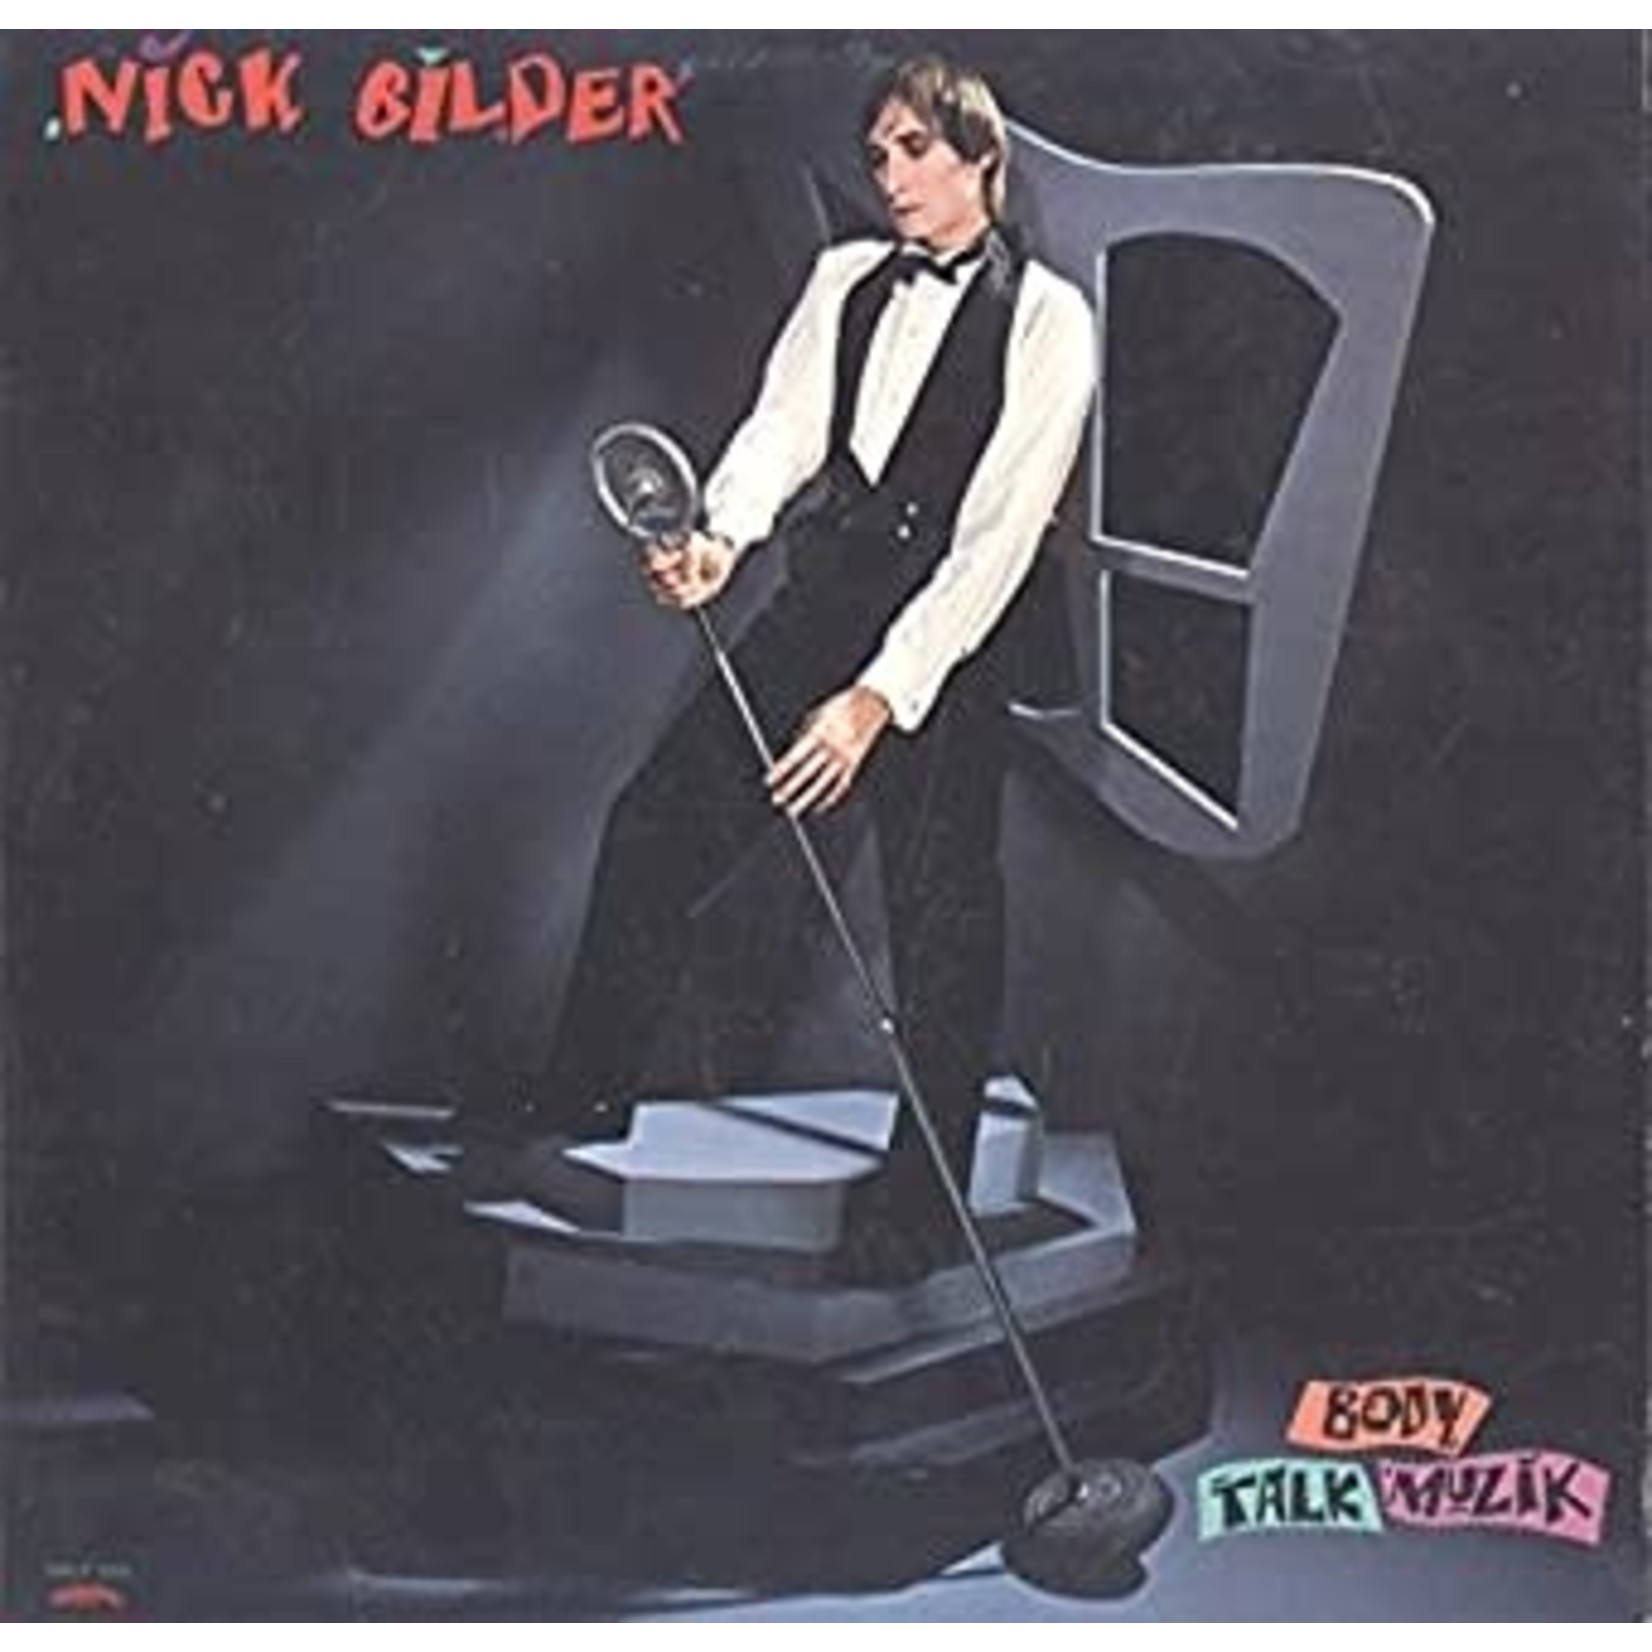 [Vintage] Nick Glider - Body Talk Muzik